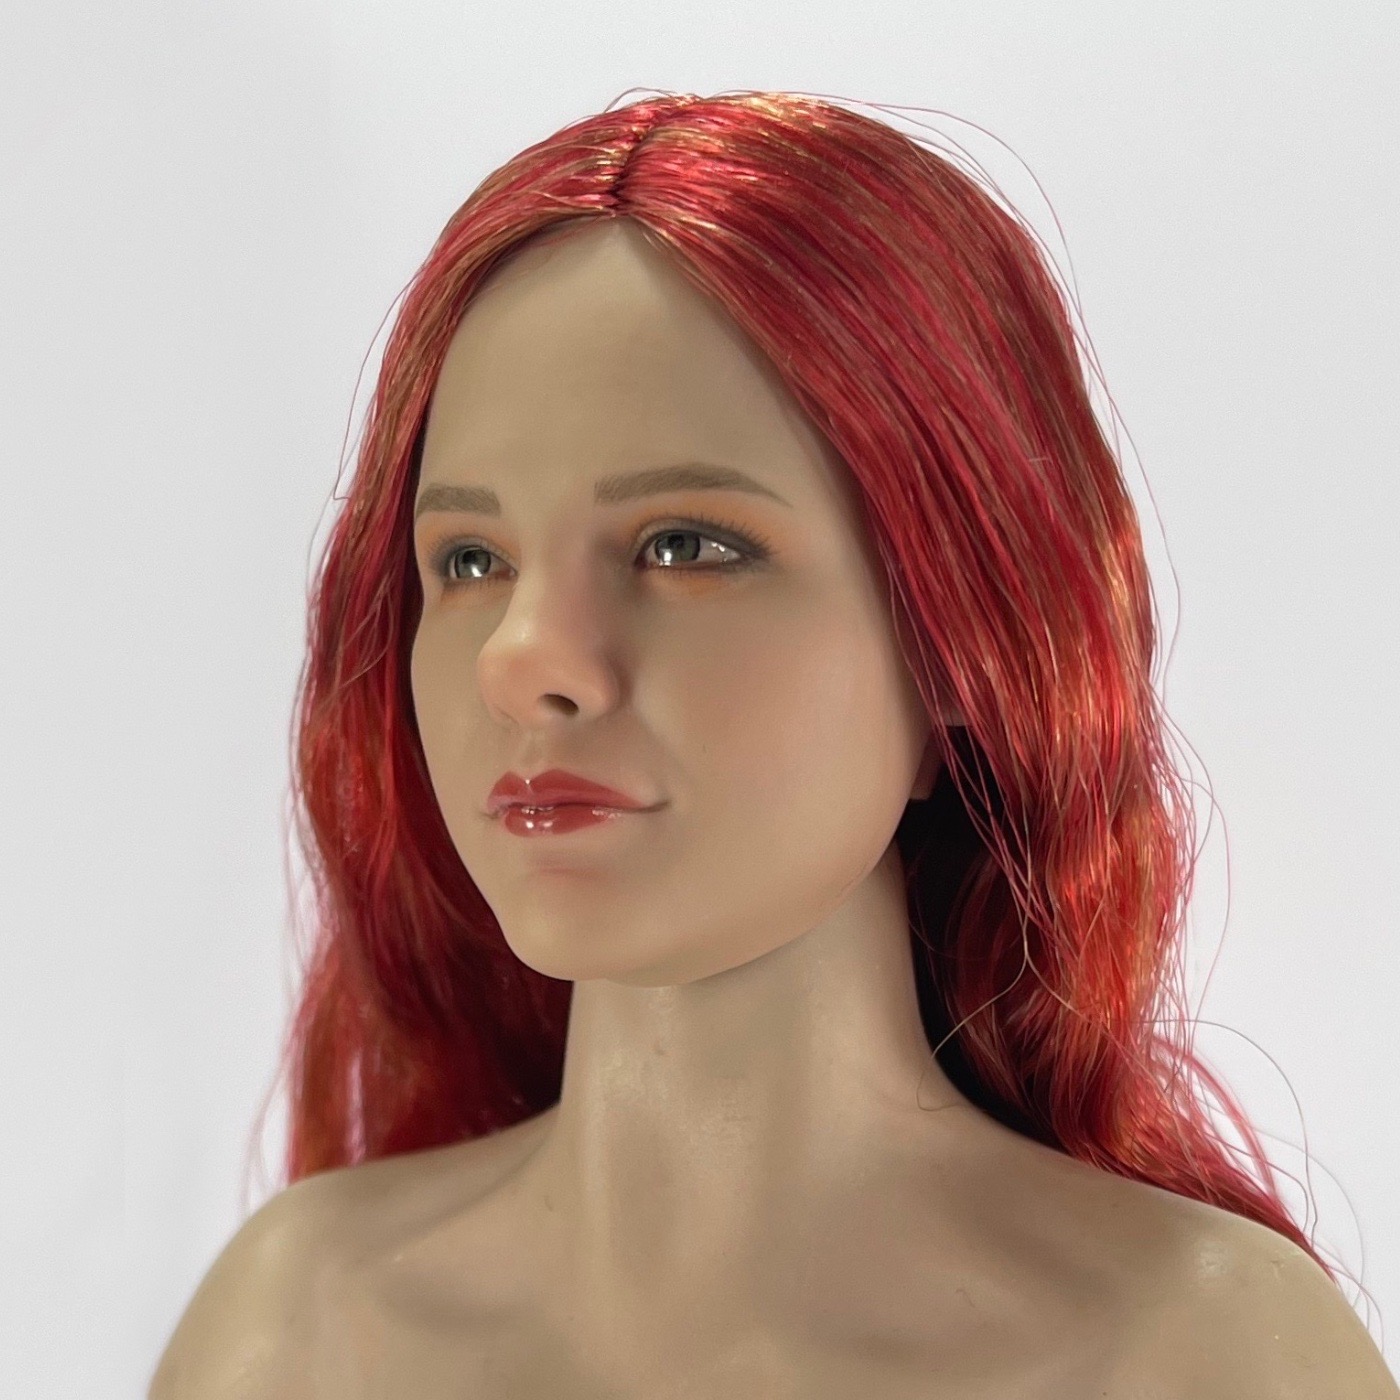 superduck - NEW PRODUCT: SUPER DUCK SDH036 1/6 Scale Female head sculpt in 4 styles 52860116643_3d0fe88b7d_o